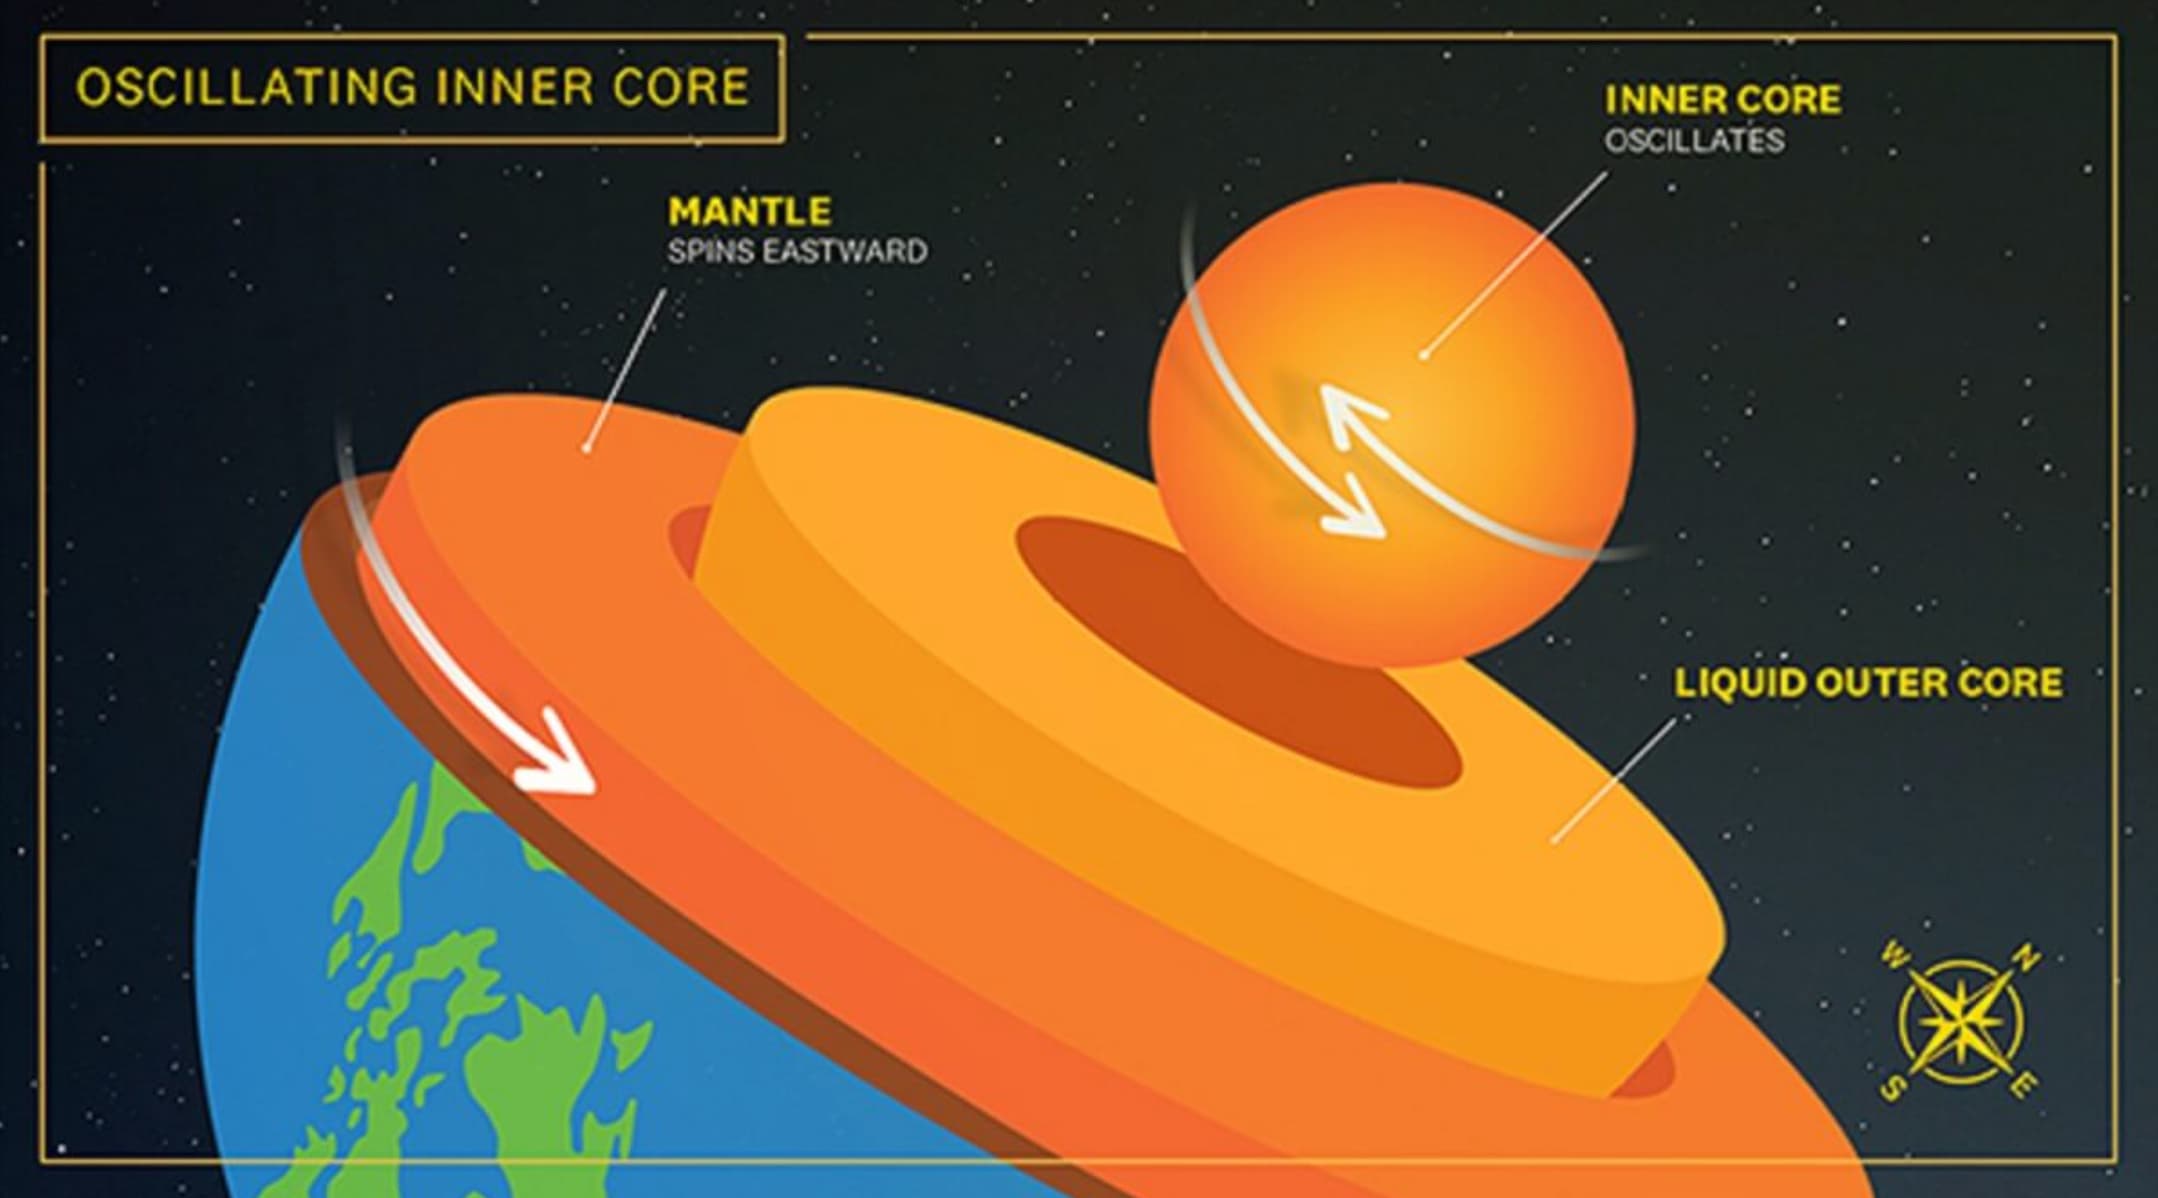 earth inner core spinning - Oscillating Inner Core Mantle Spins Eastward Inner Core Oscillates Liquid Outer Core